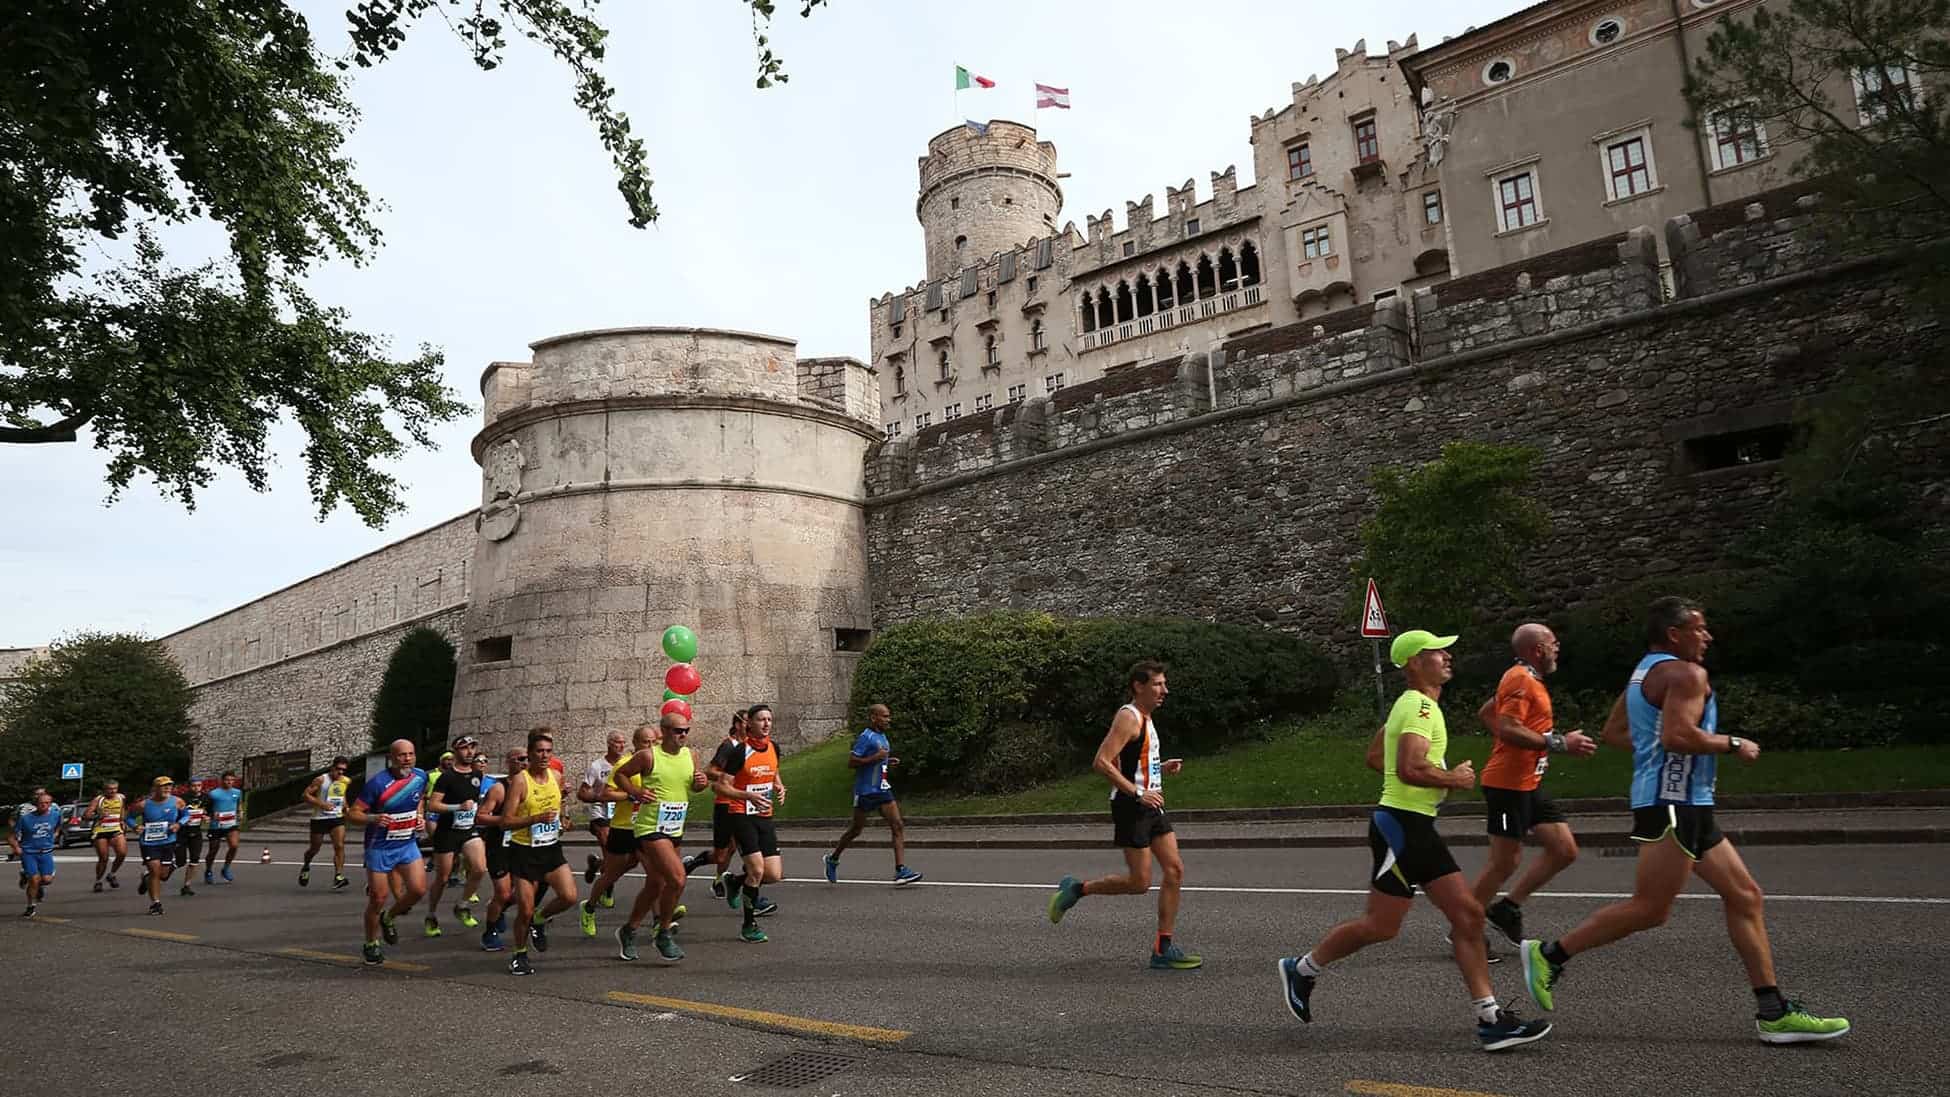 Trento Half Marathon